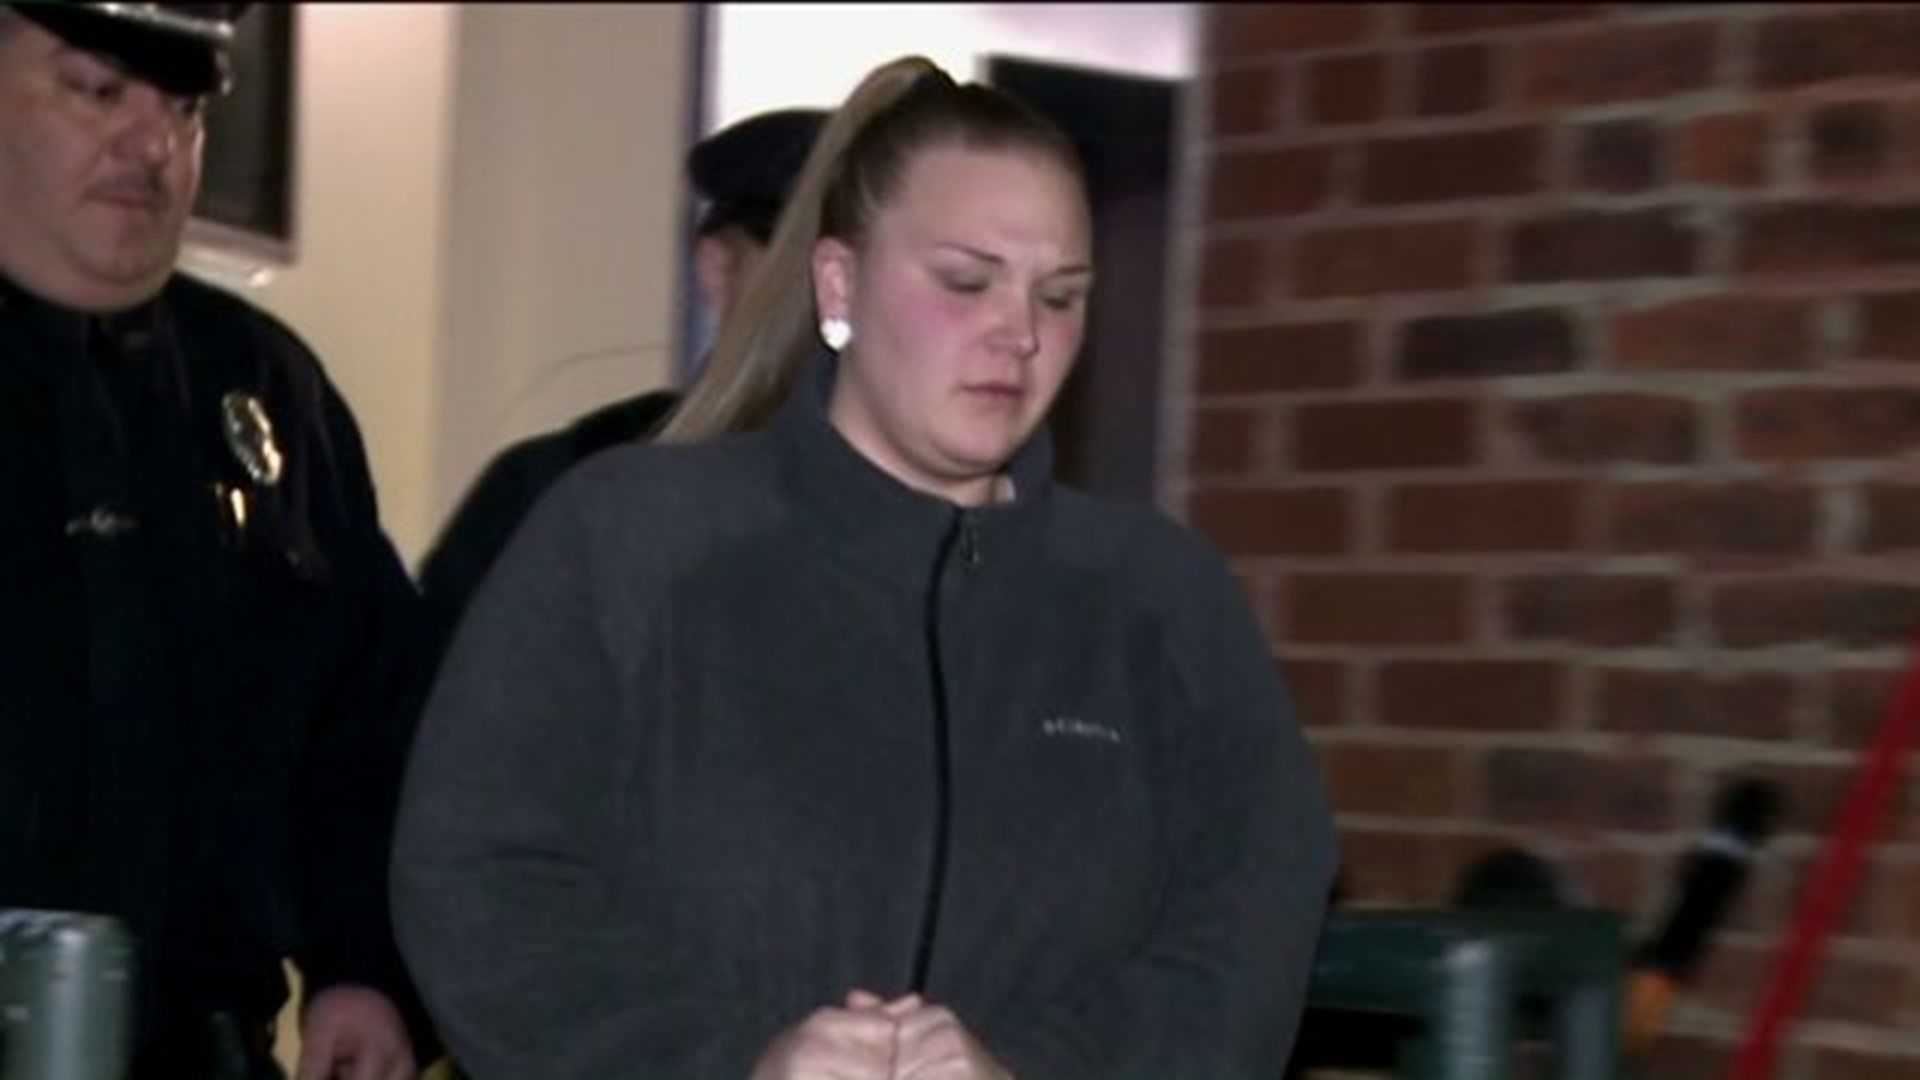 Carbondale Woman Arrested for Selling Prescription Drugs